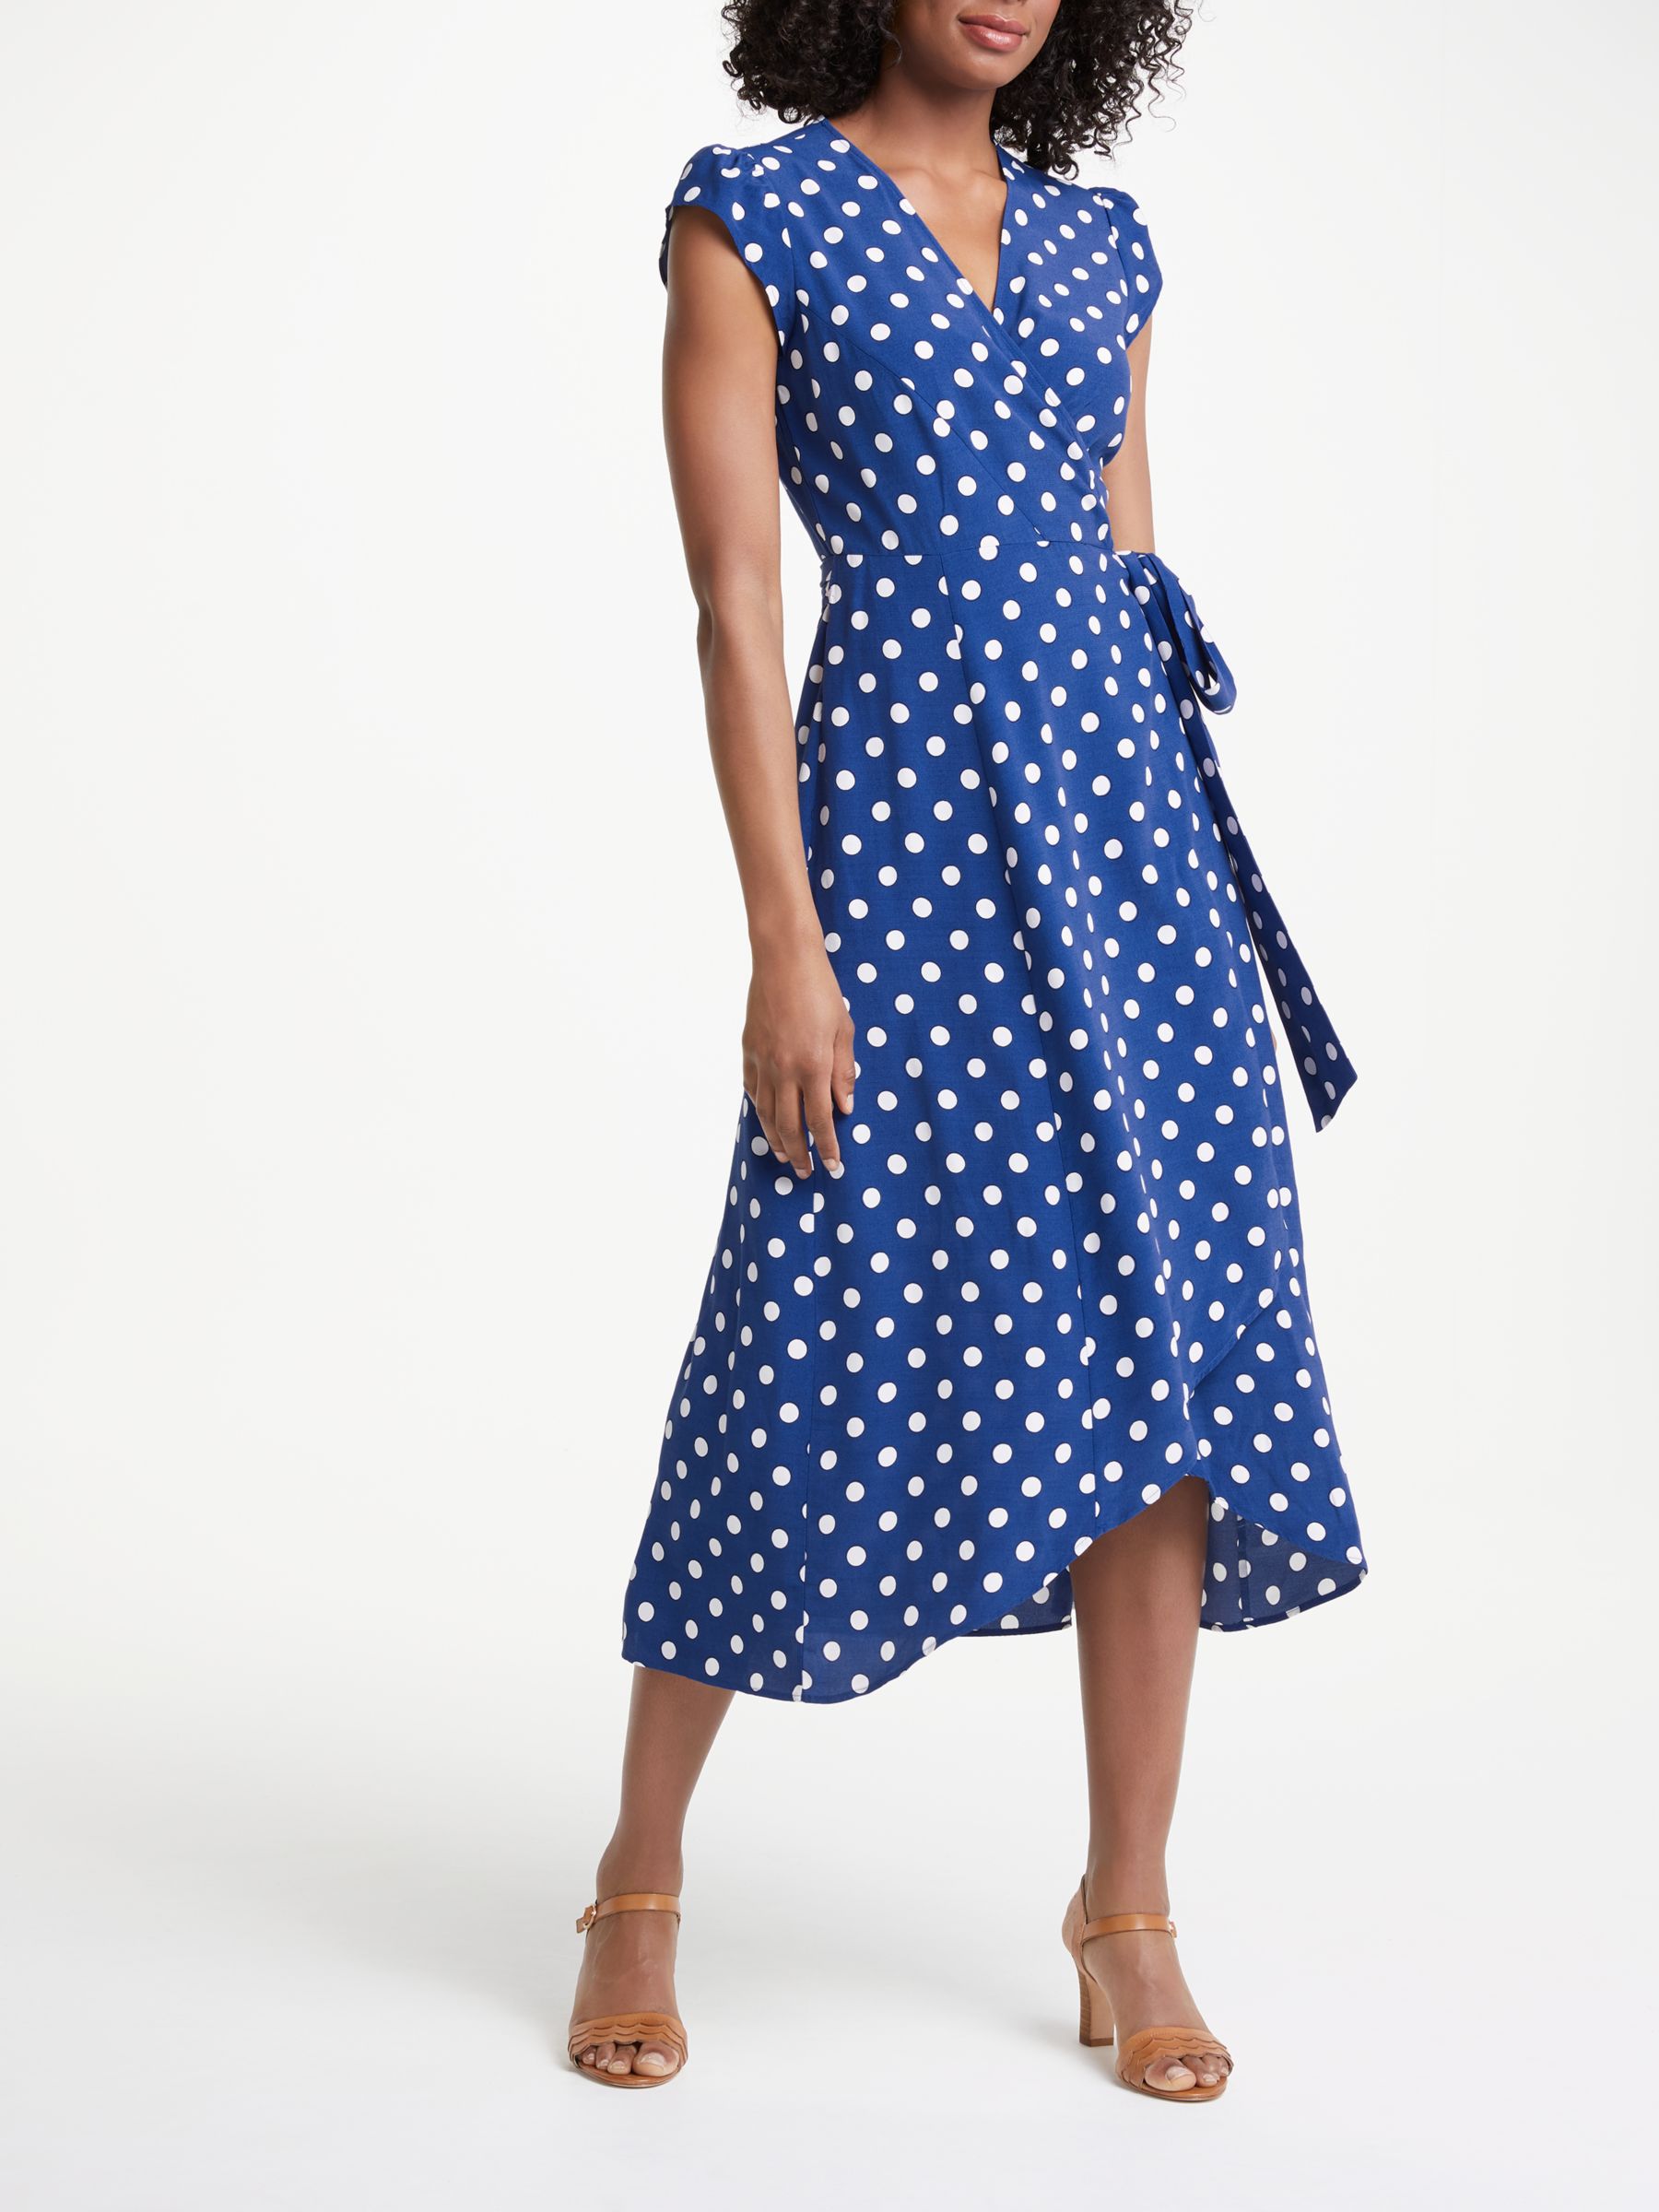 blue and white polka dot wrap dress